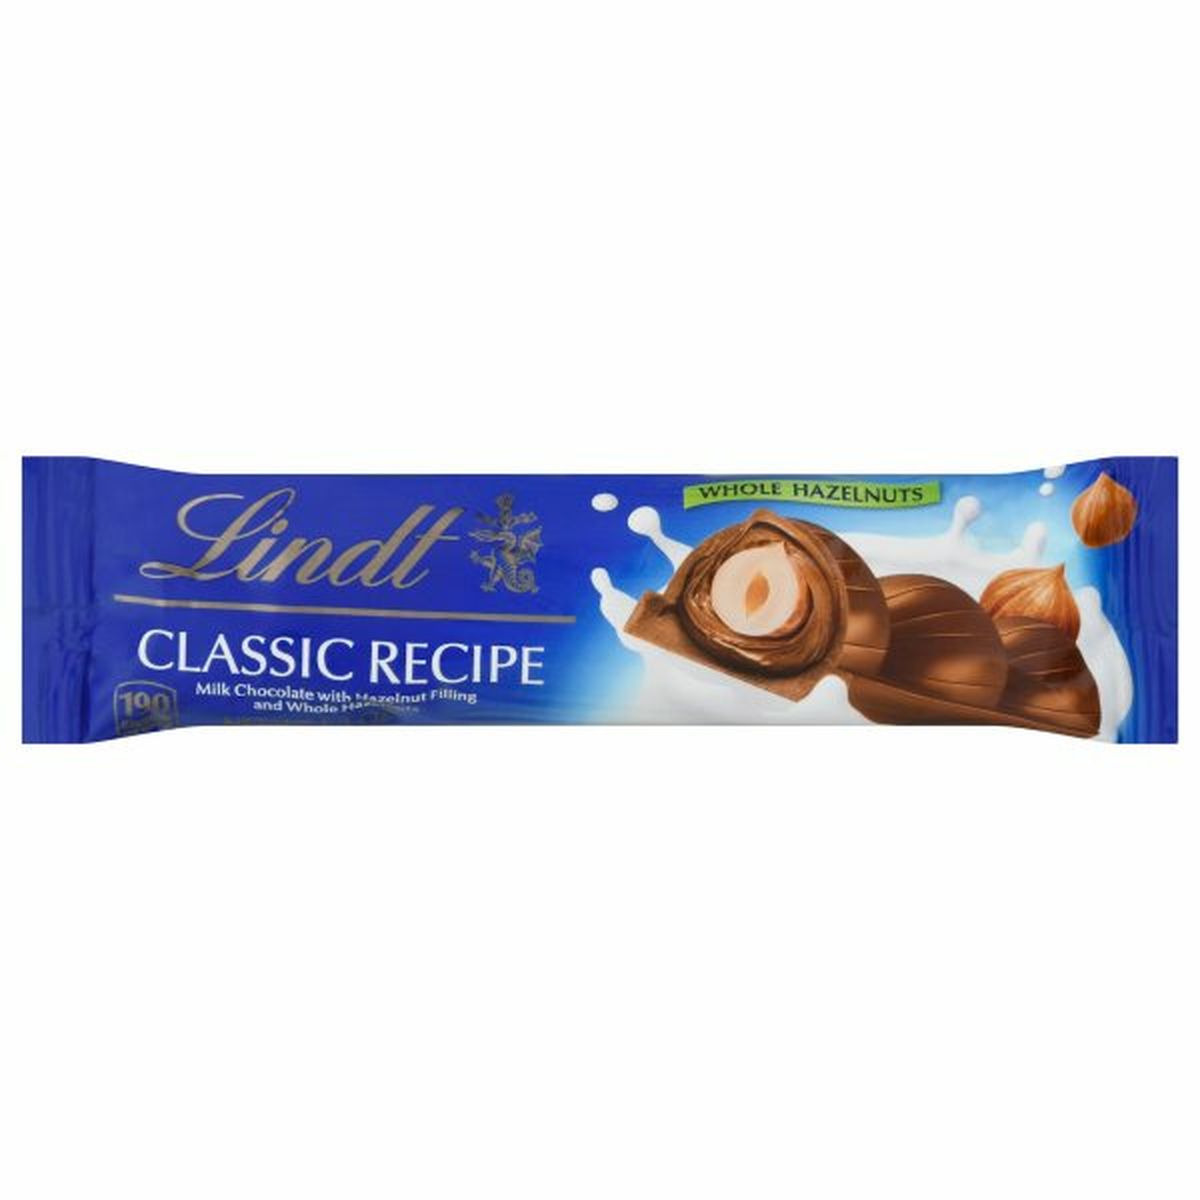 Calories in Lindt Classic Recipe Milk Chocolate, Whole Hazelnuts, Classic Recipe